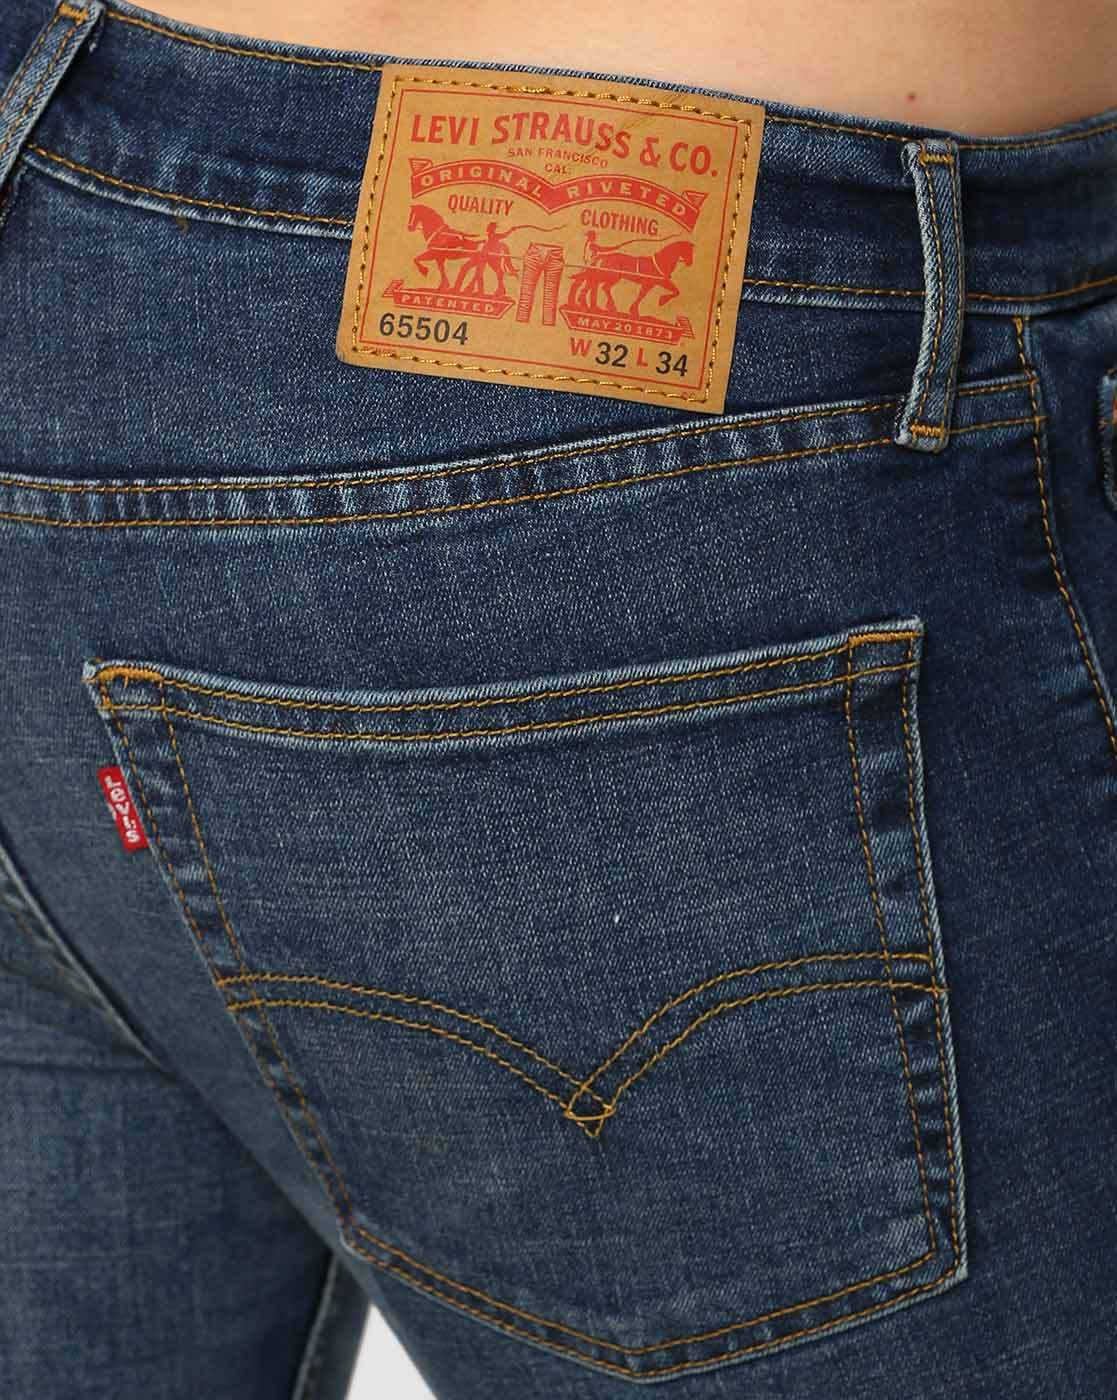 levis 65504 jeans online Cheaper Than 